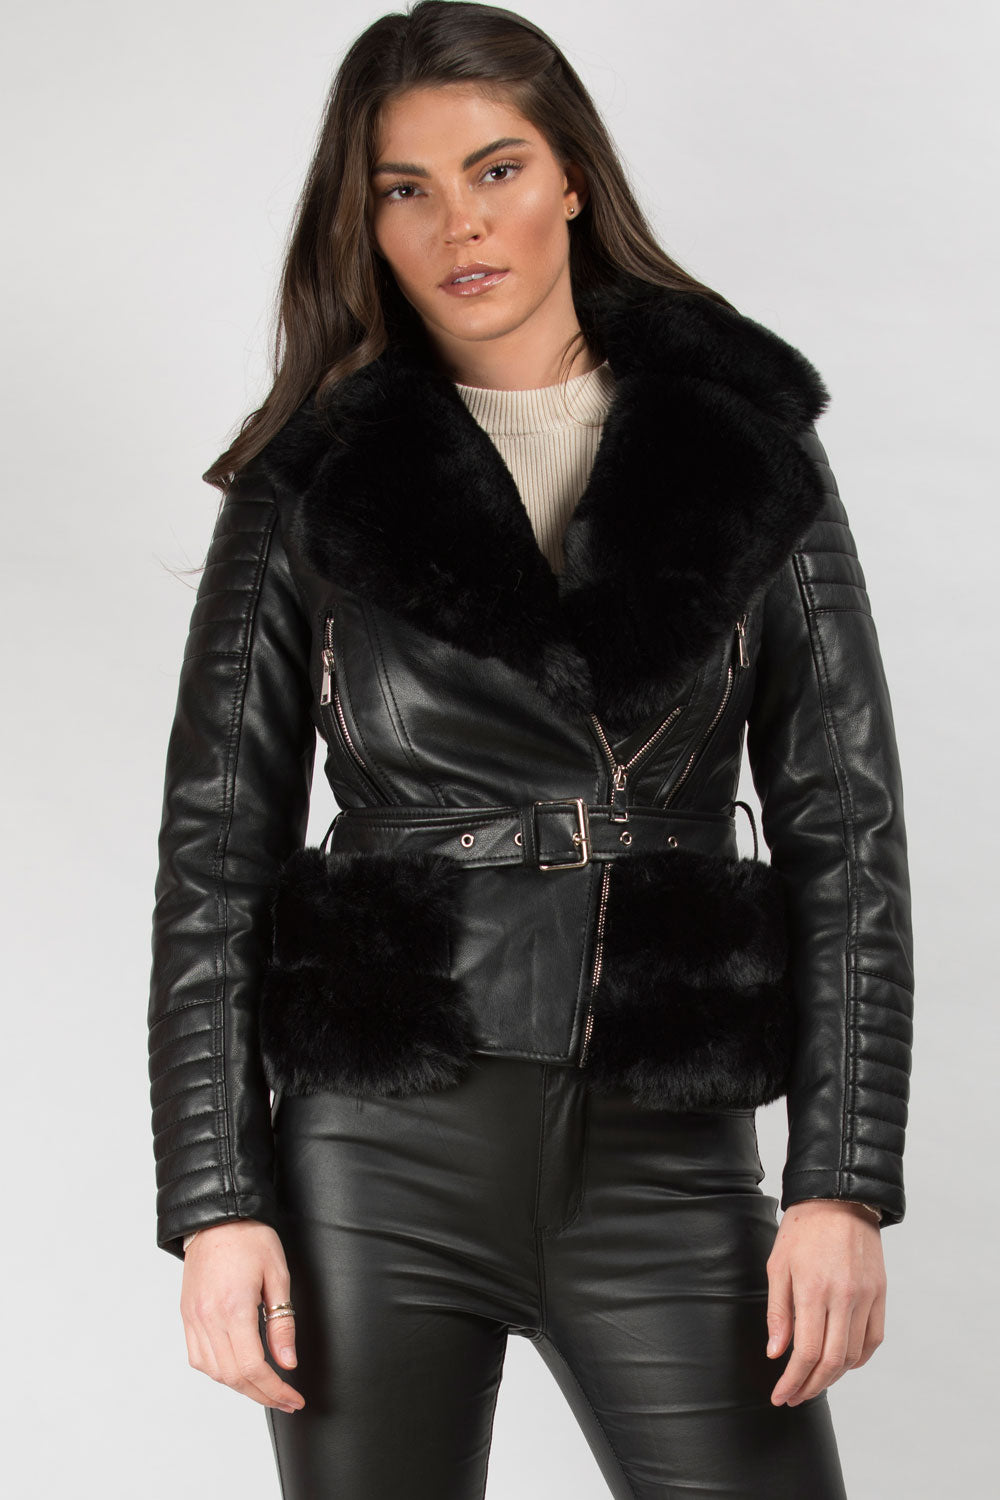 Black Faux Fur Faux Leather Belted Jacket Biker Style – Styledup.co.uk